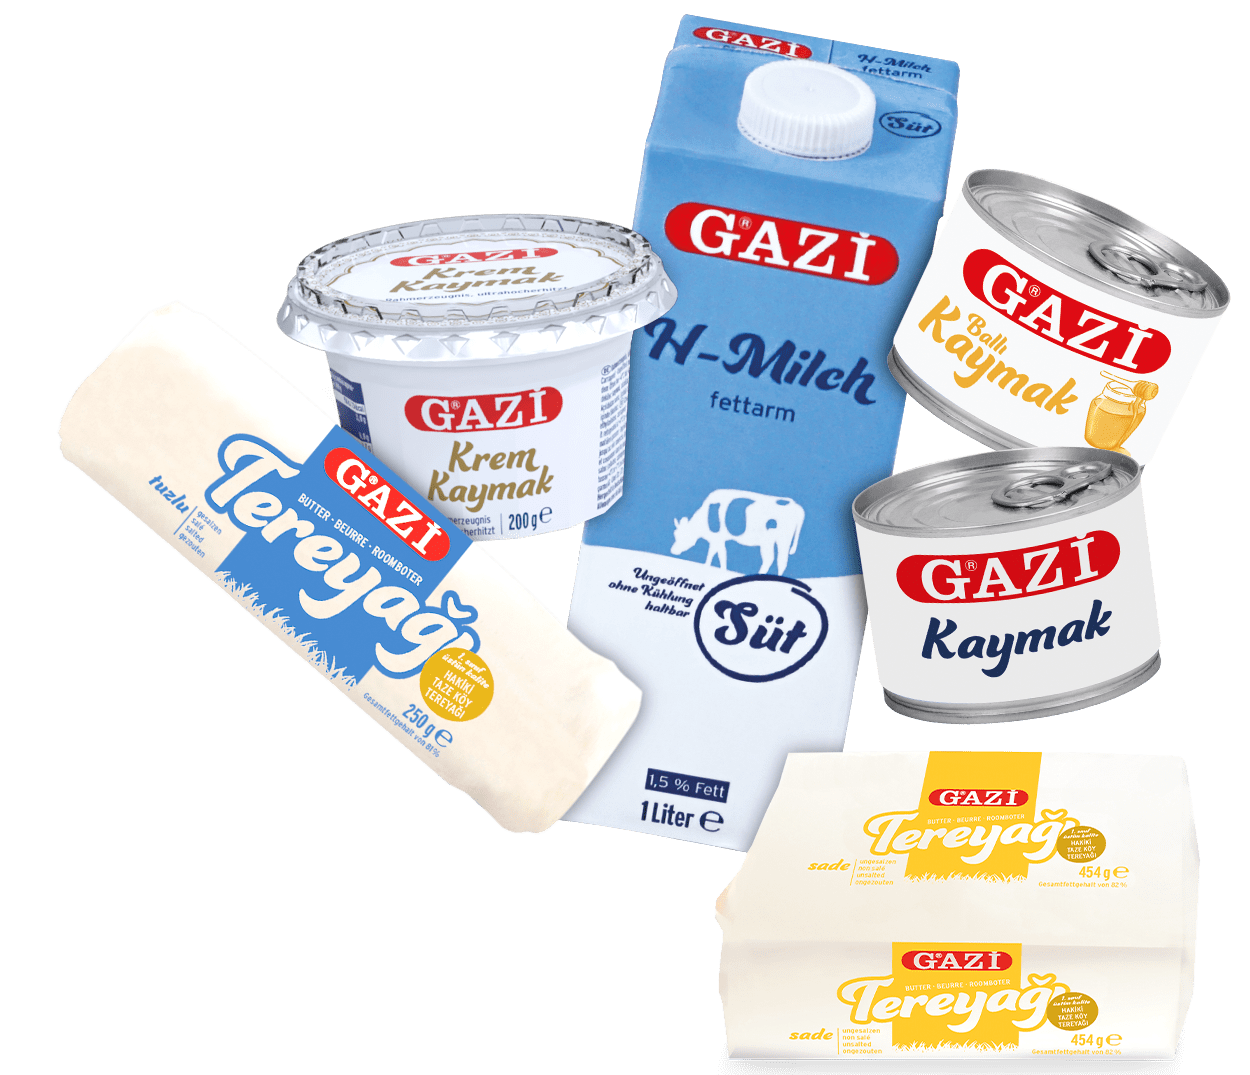 GAZi Klassik Milch Rahm Butter Packagings